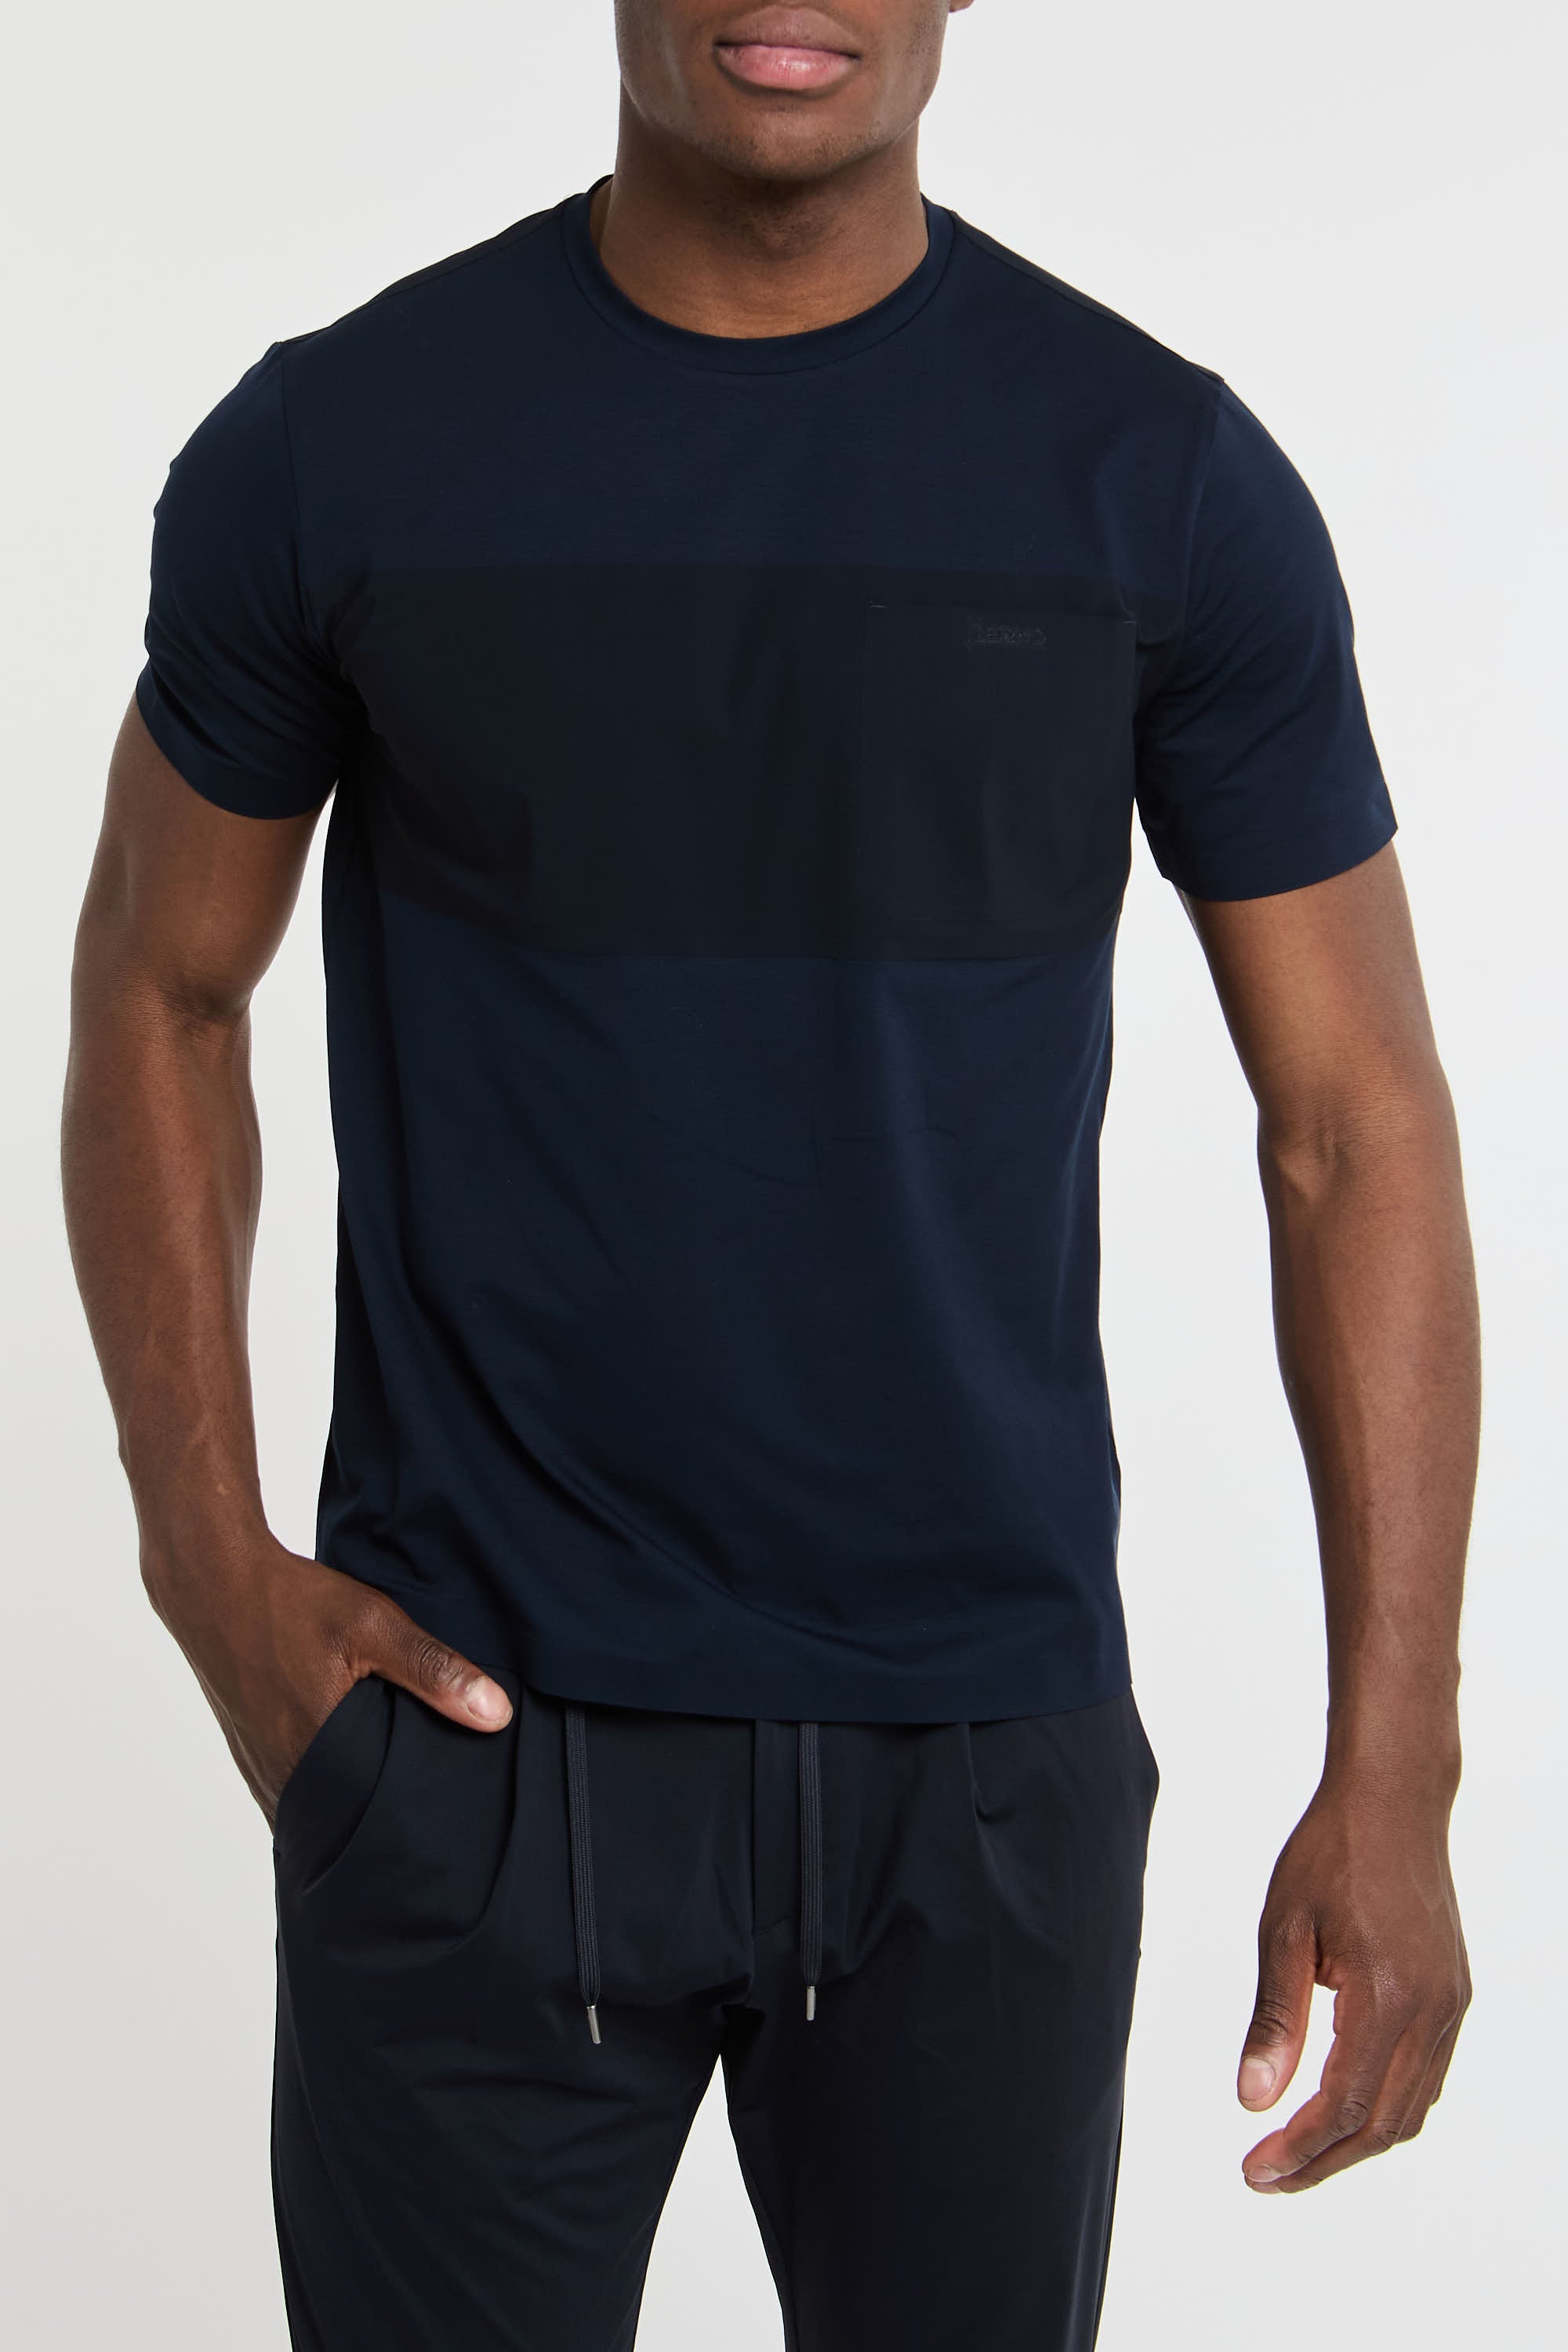 Herno T-Shirt Superfine Cotton/Stretch & Light Scuba Blue-5